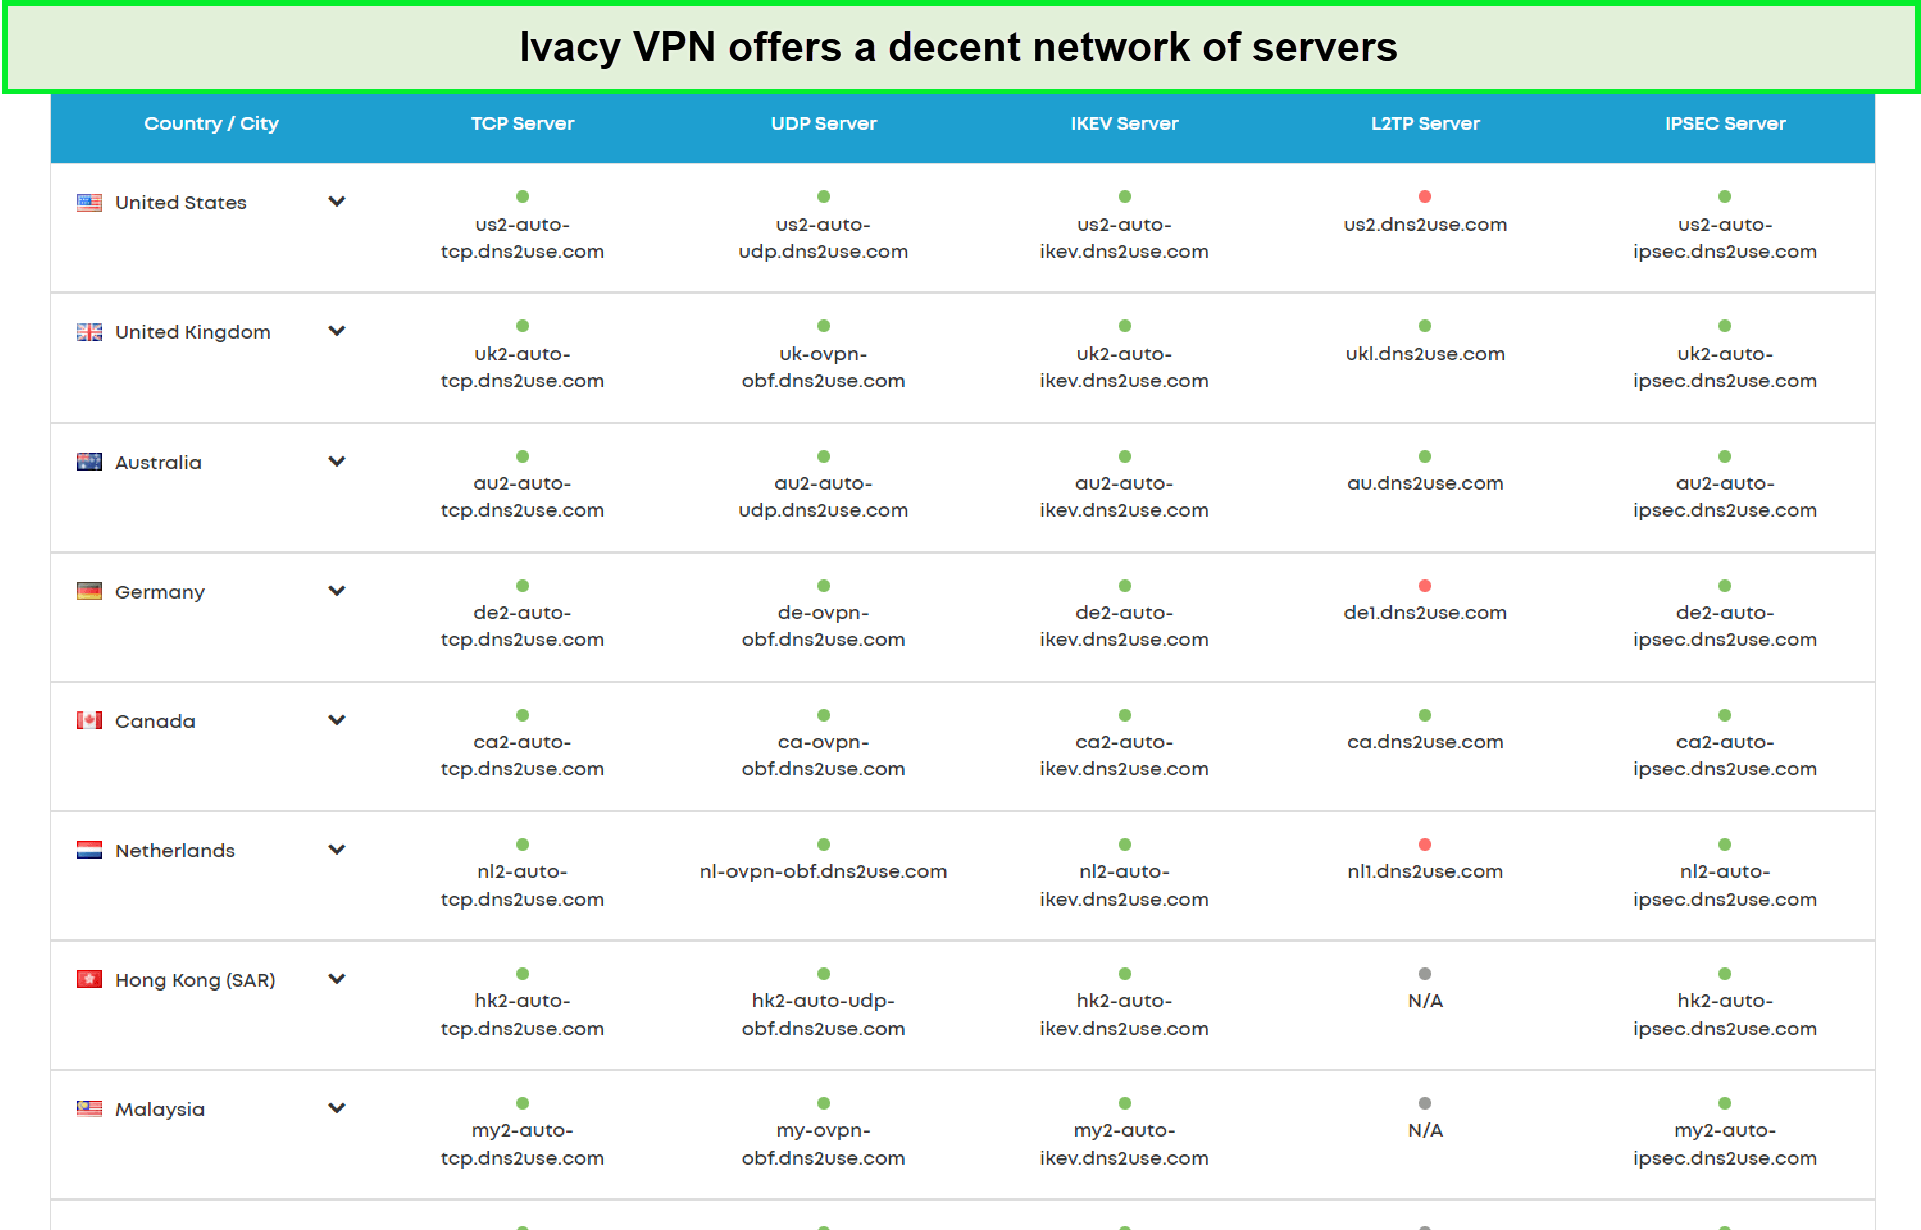 ivacy-server-network-in-Spain